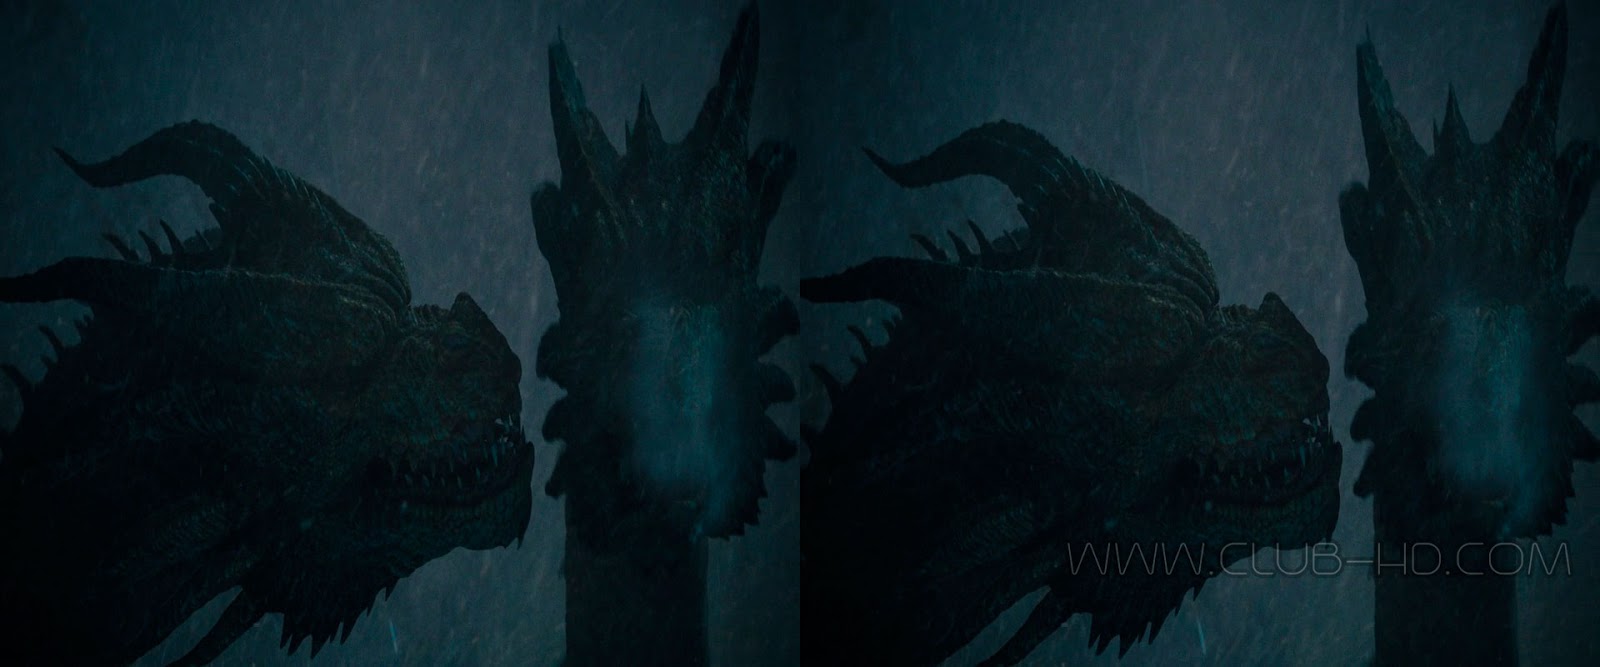 Godzilla-King-of-the-Monsters-3D-CAPTURA-2.jpg